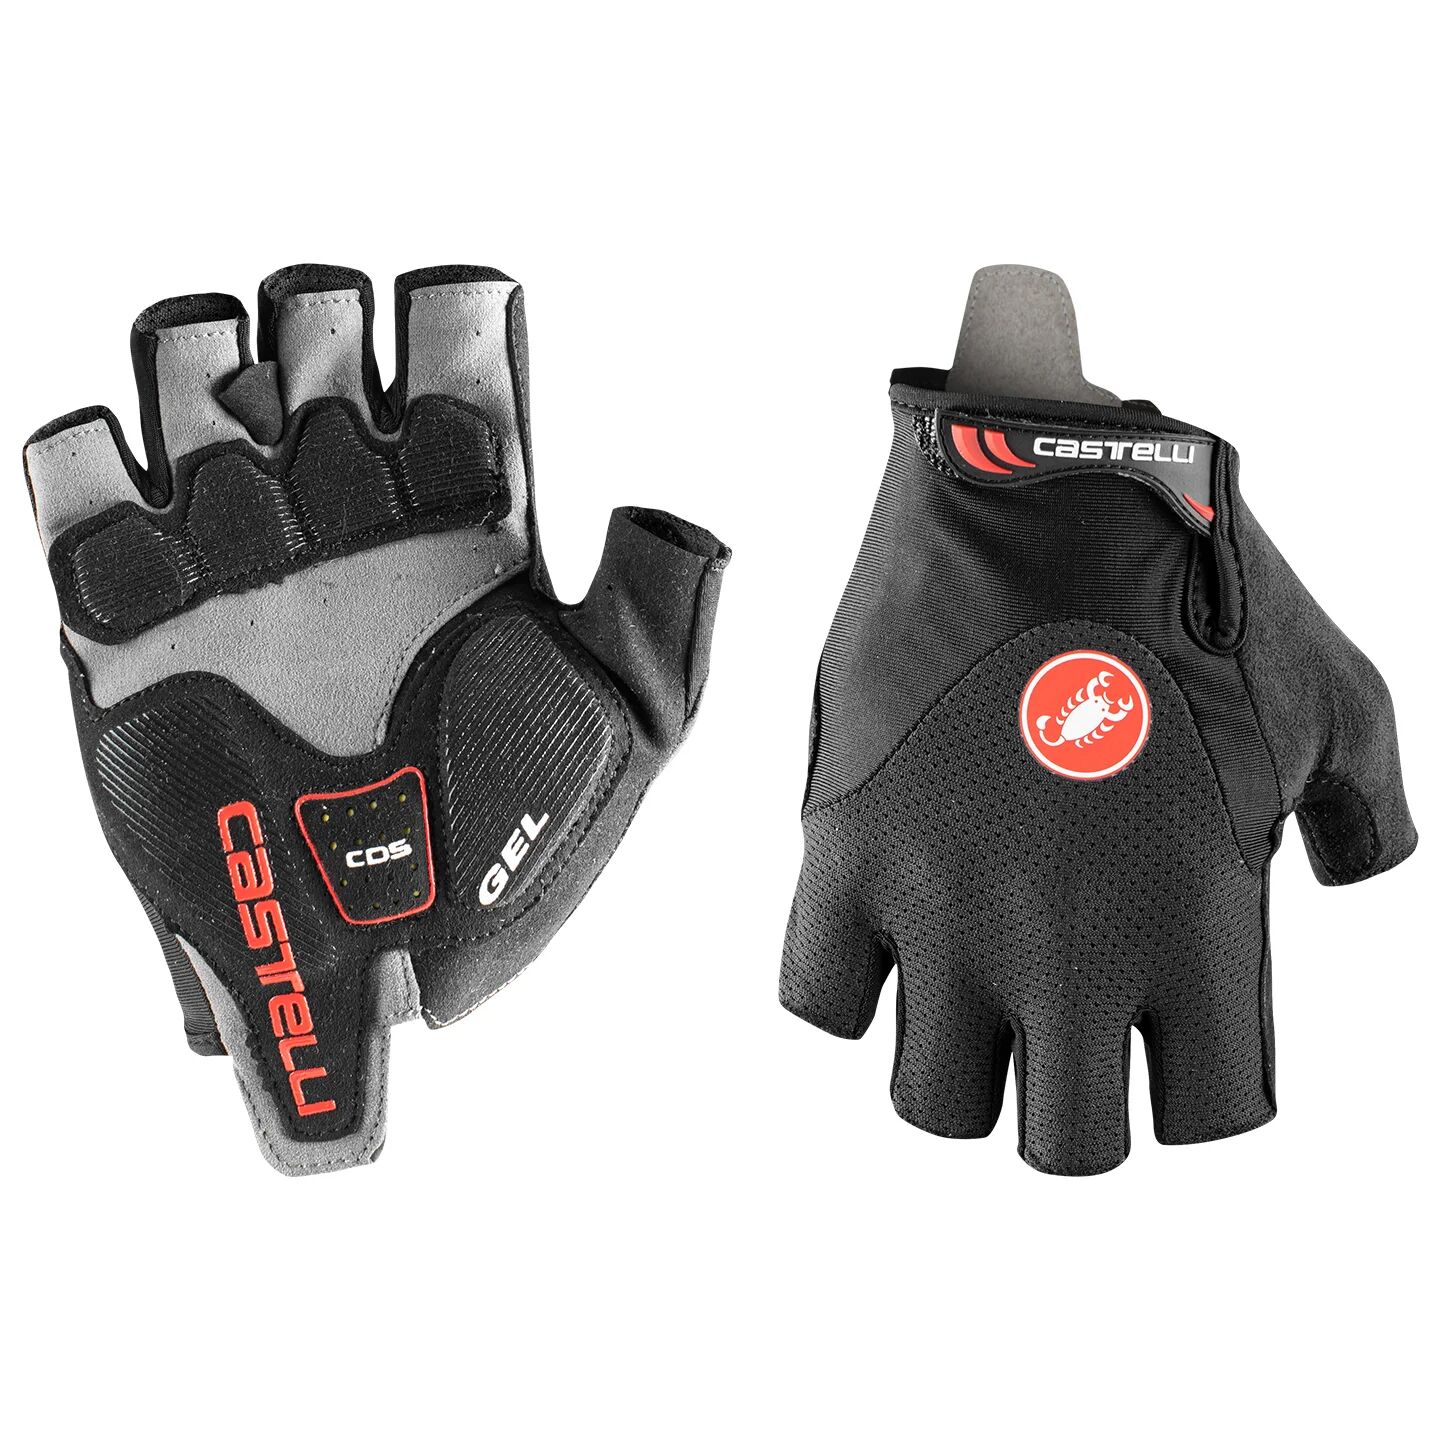 Castelli Arenberg Gel 2 Cycling Gloves Cycling Gloves, for men, size L, Cycling gloves, Bike gear